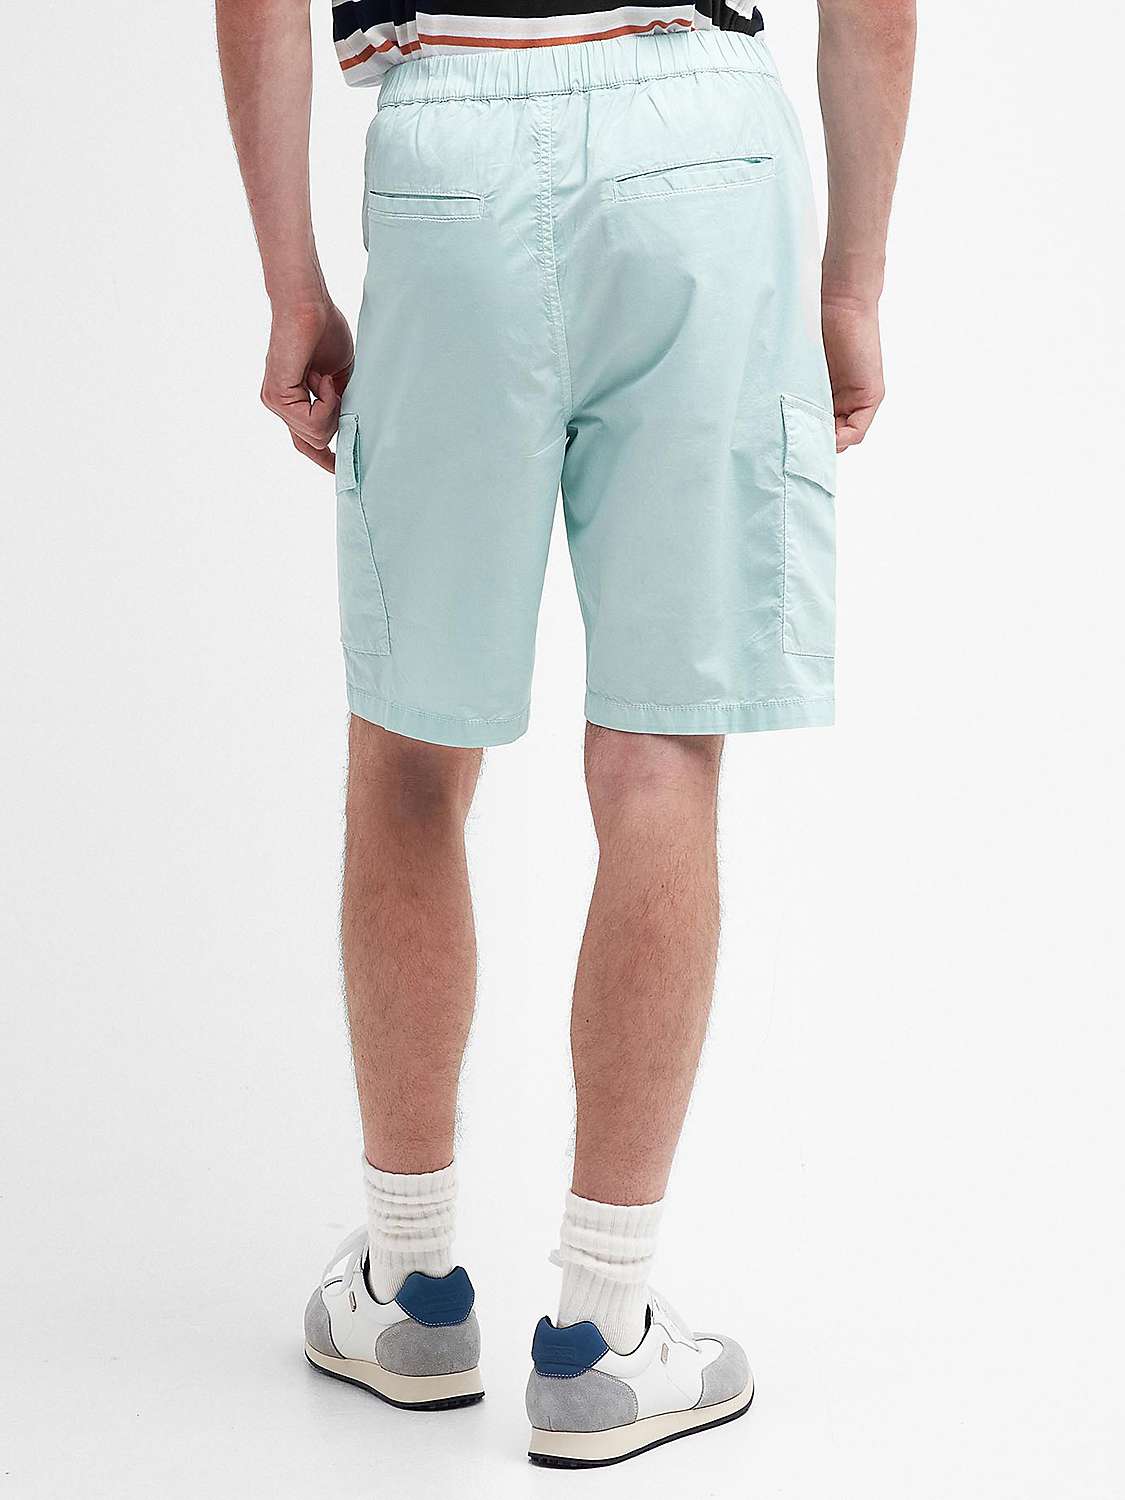 Buy Barbour International Parson Shorts, Green Fig Online at johnlewis.com